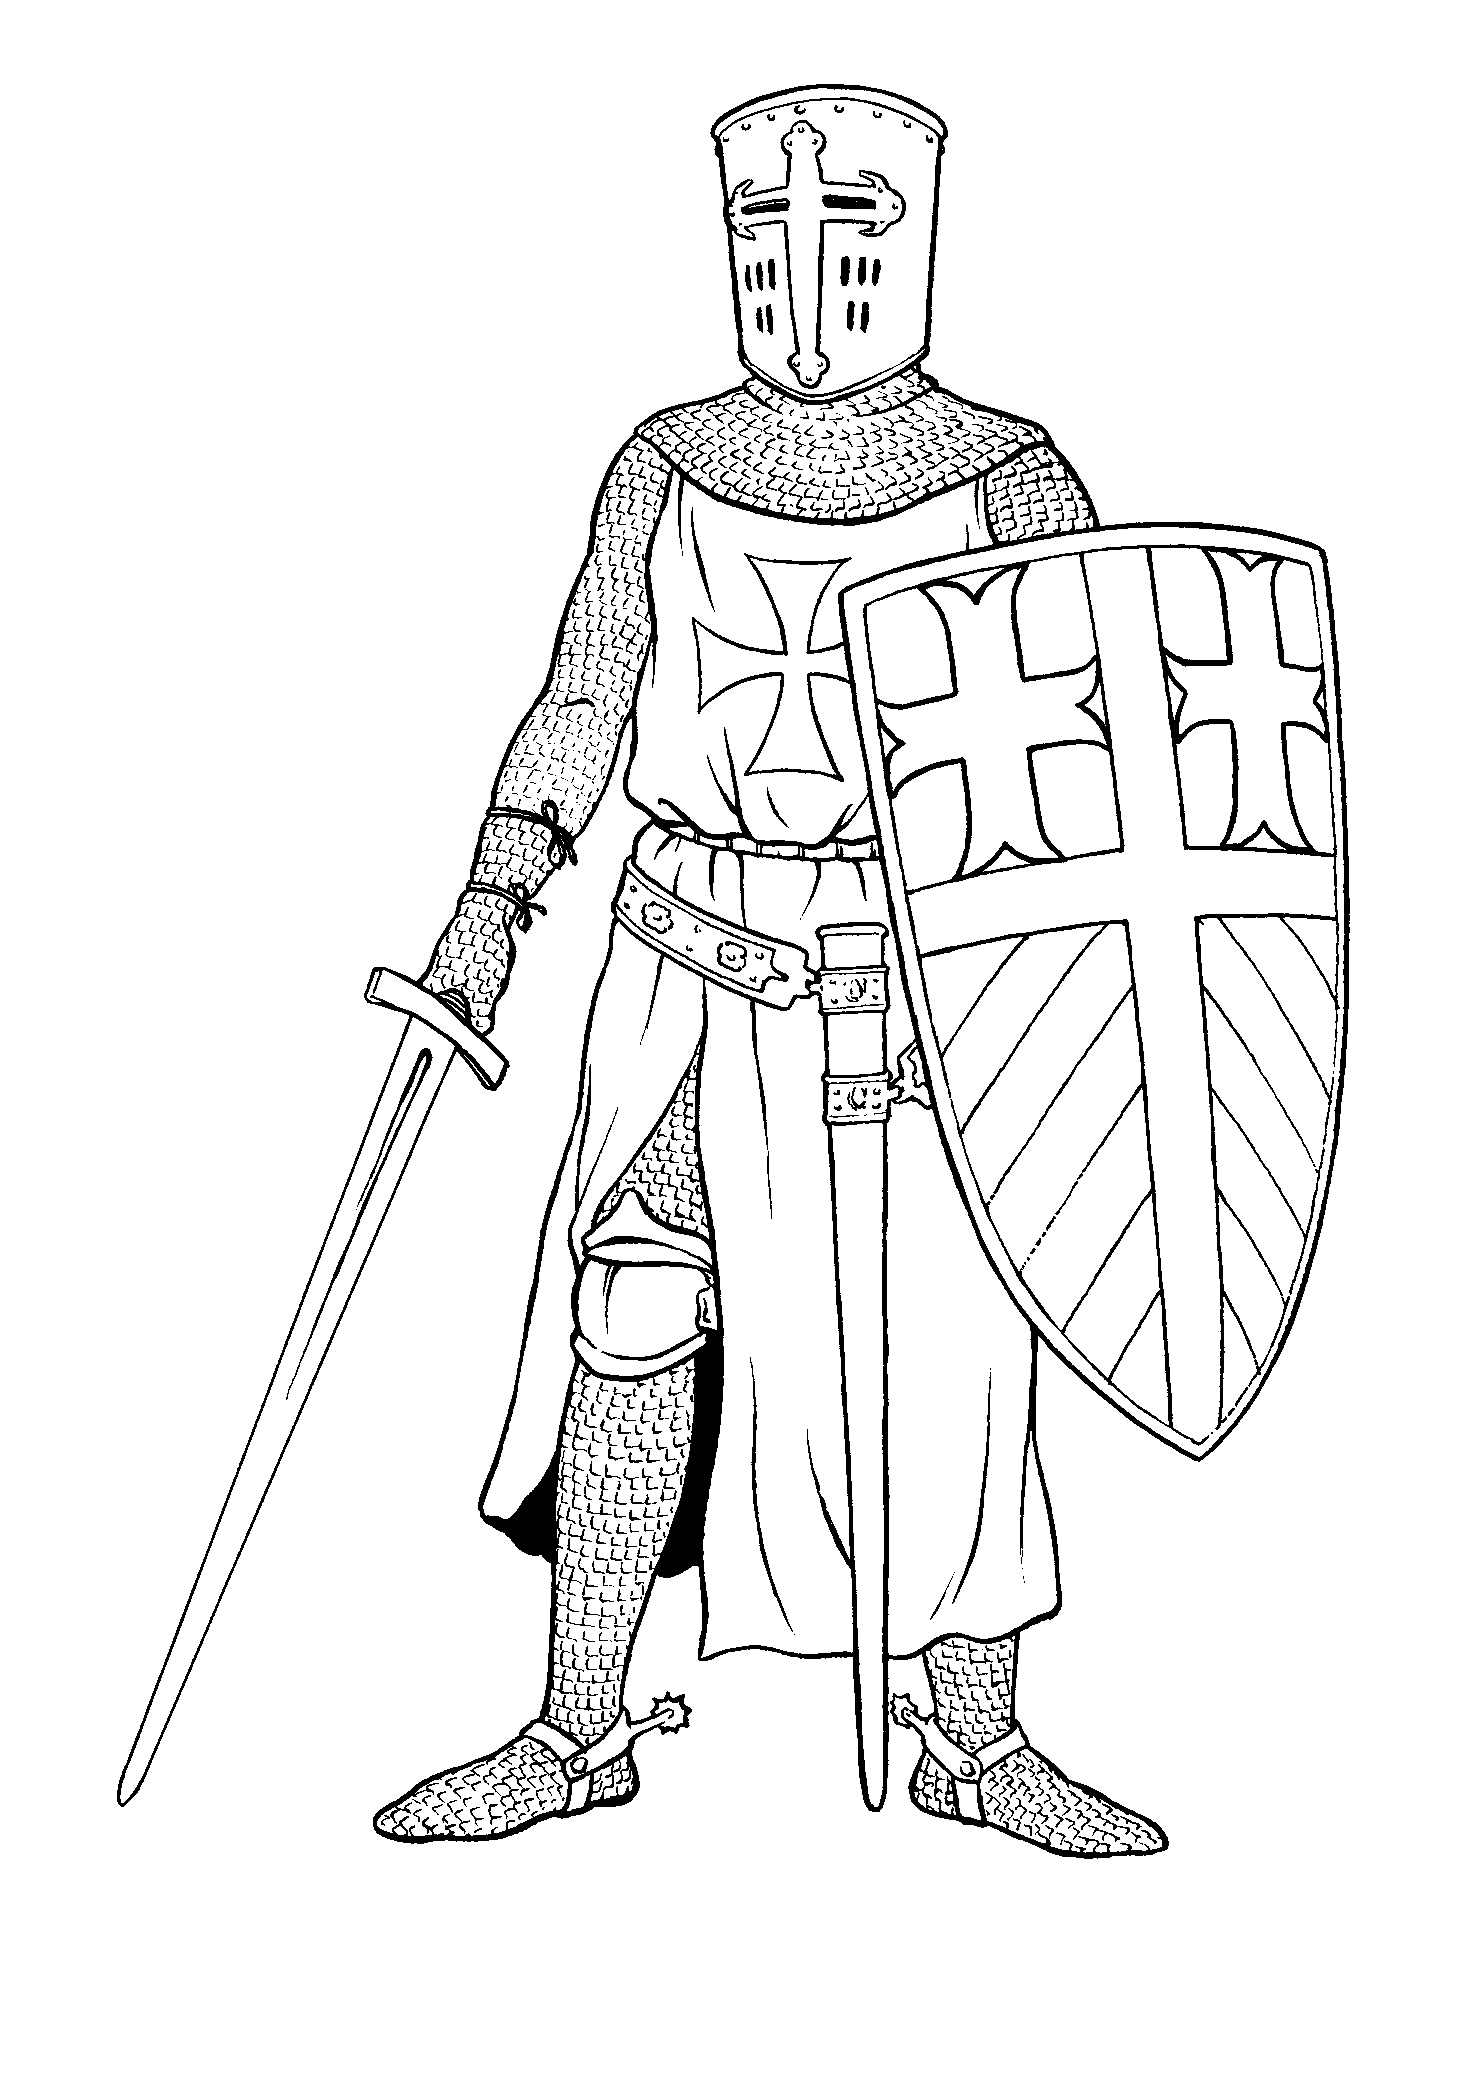 Coloring page - Knight Crusade